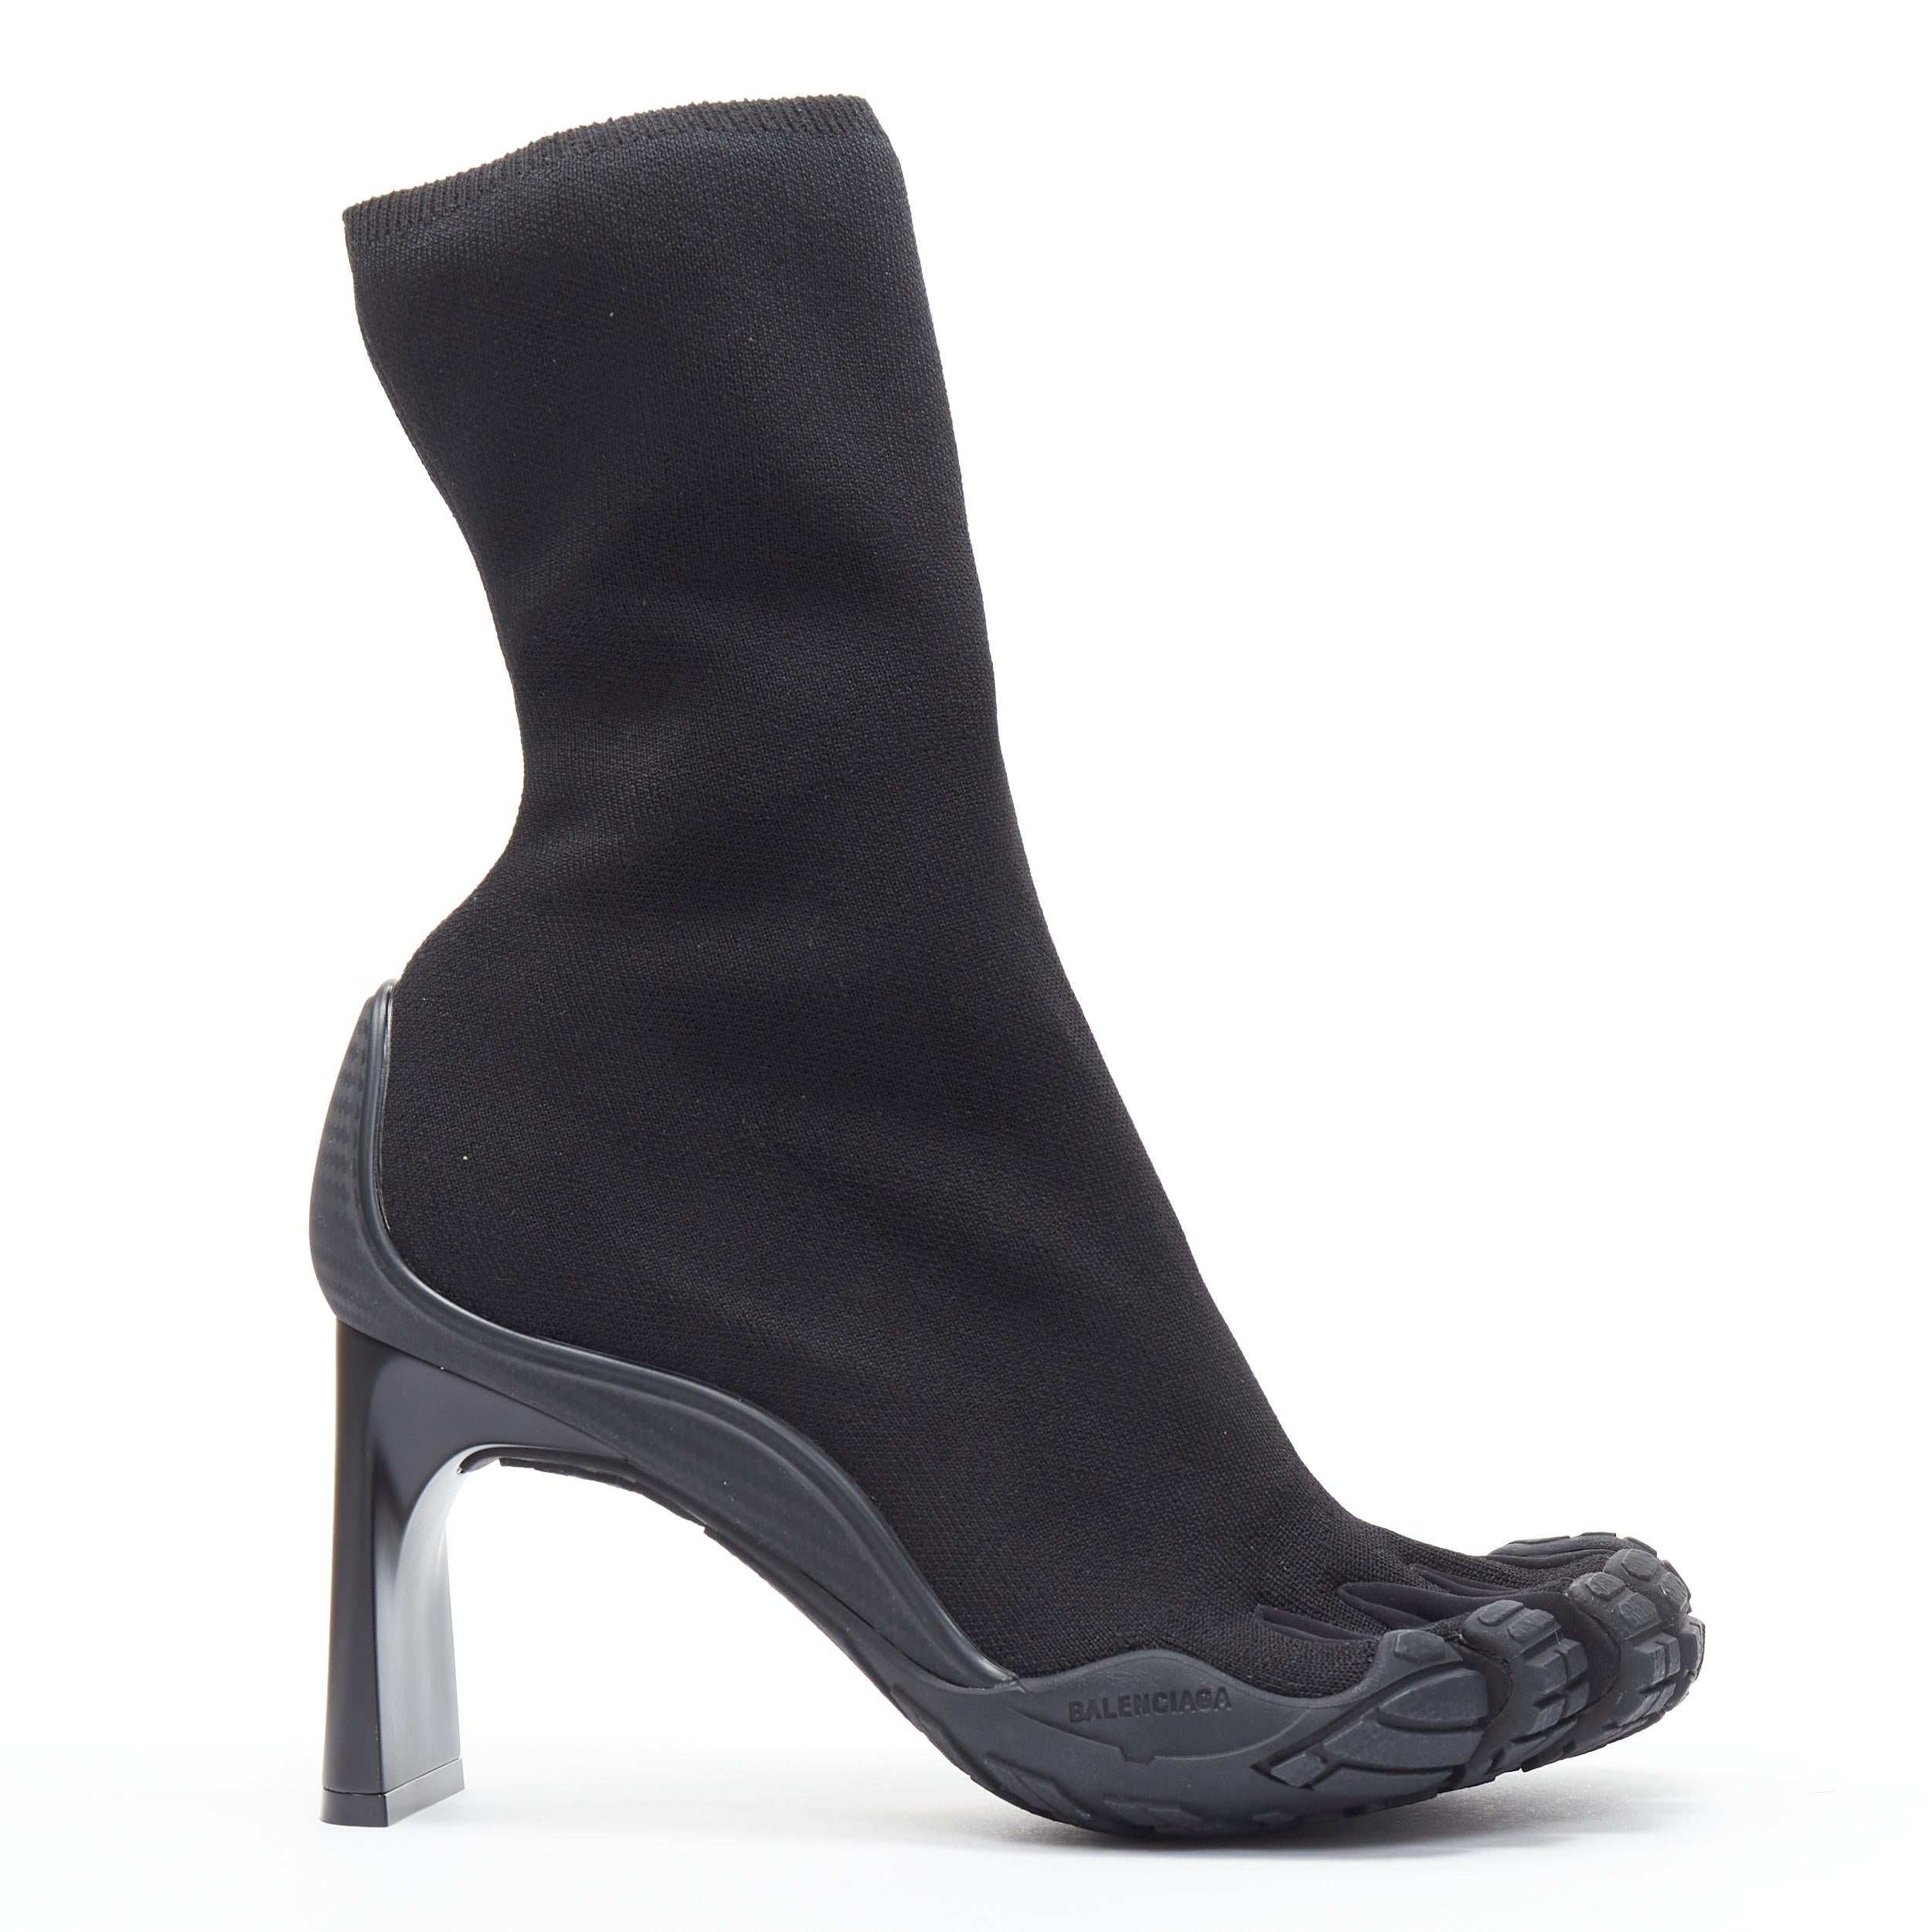 new BALENCIAGA 2020 Runway 5 Toe Tabi Ninja Vibram sock boots EU37 
Reference: TGAS/B01321 
Brand: Balenciaga 
Designer: Demna Gvasalia 
Model: 5-Toe Vibram Sock Boot 
Material: Fabric 
Color: Black 
Pattern: Solid 
Closure: Stretch 
Extra Detail: